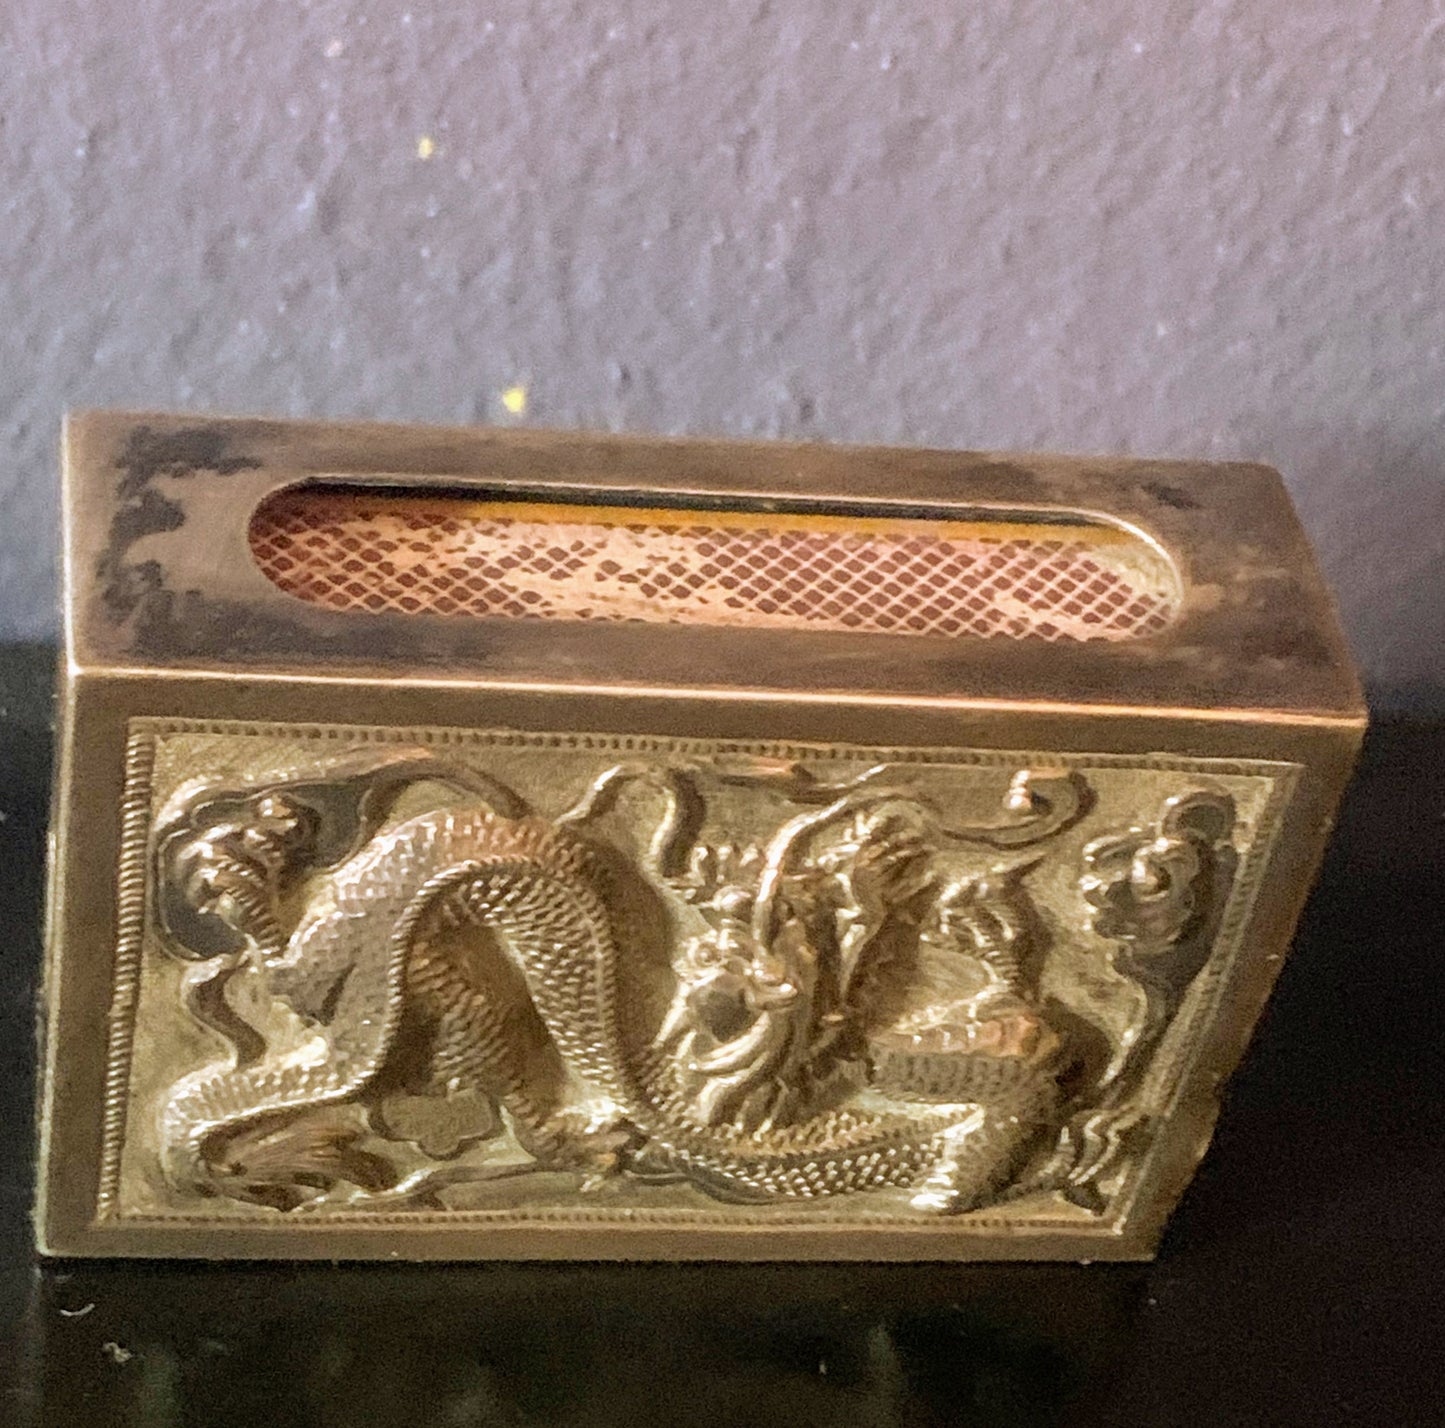 A silver matchbox cover